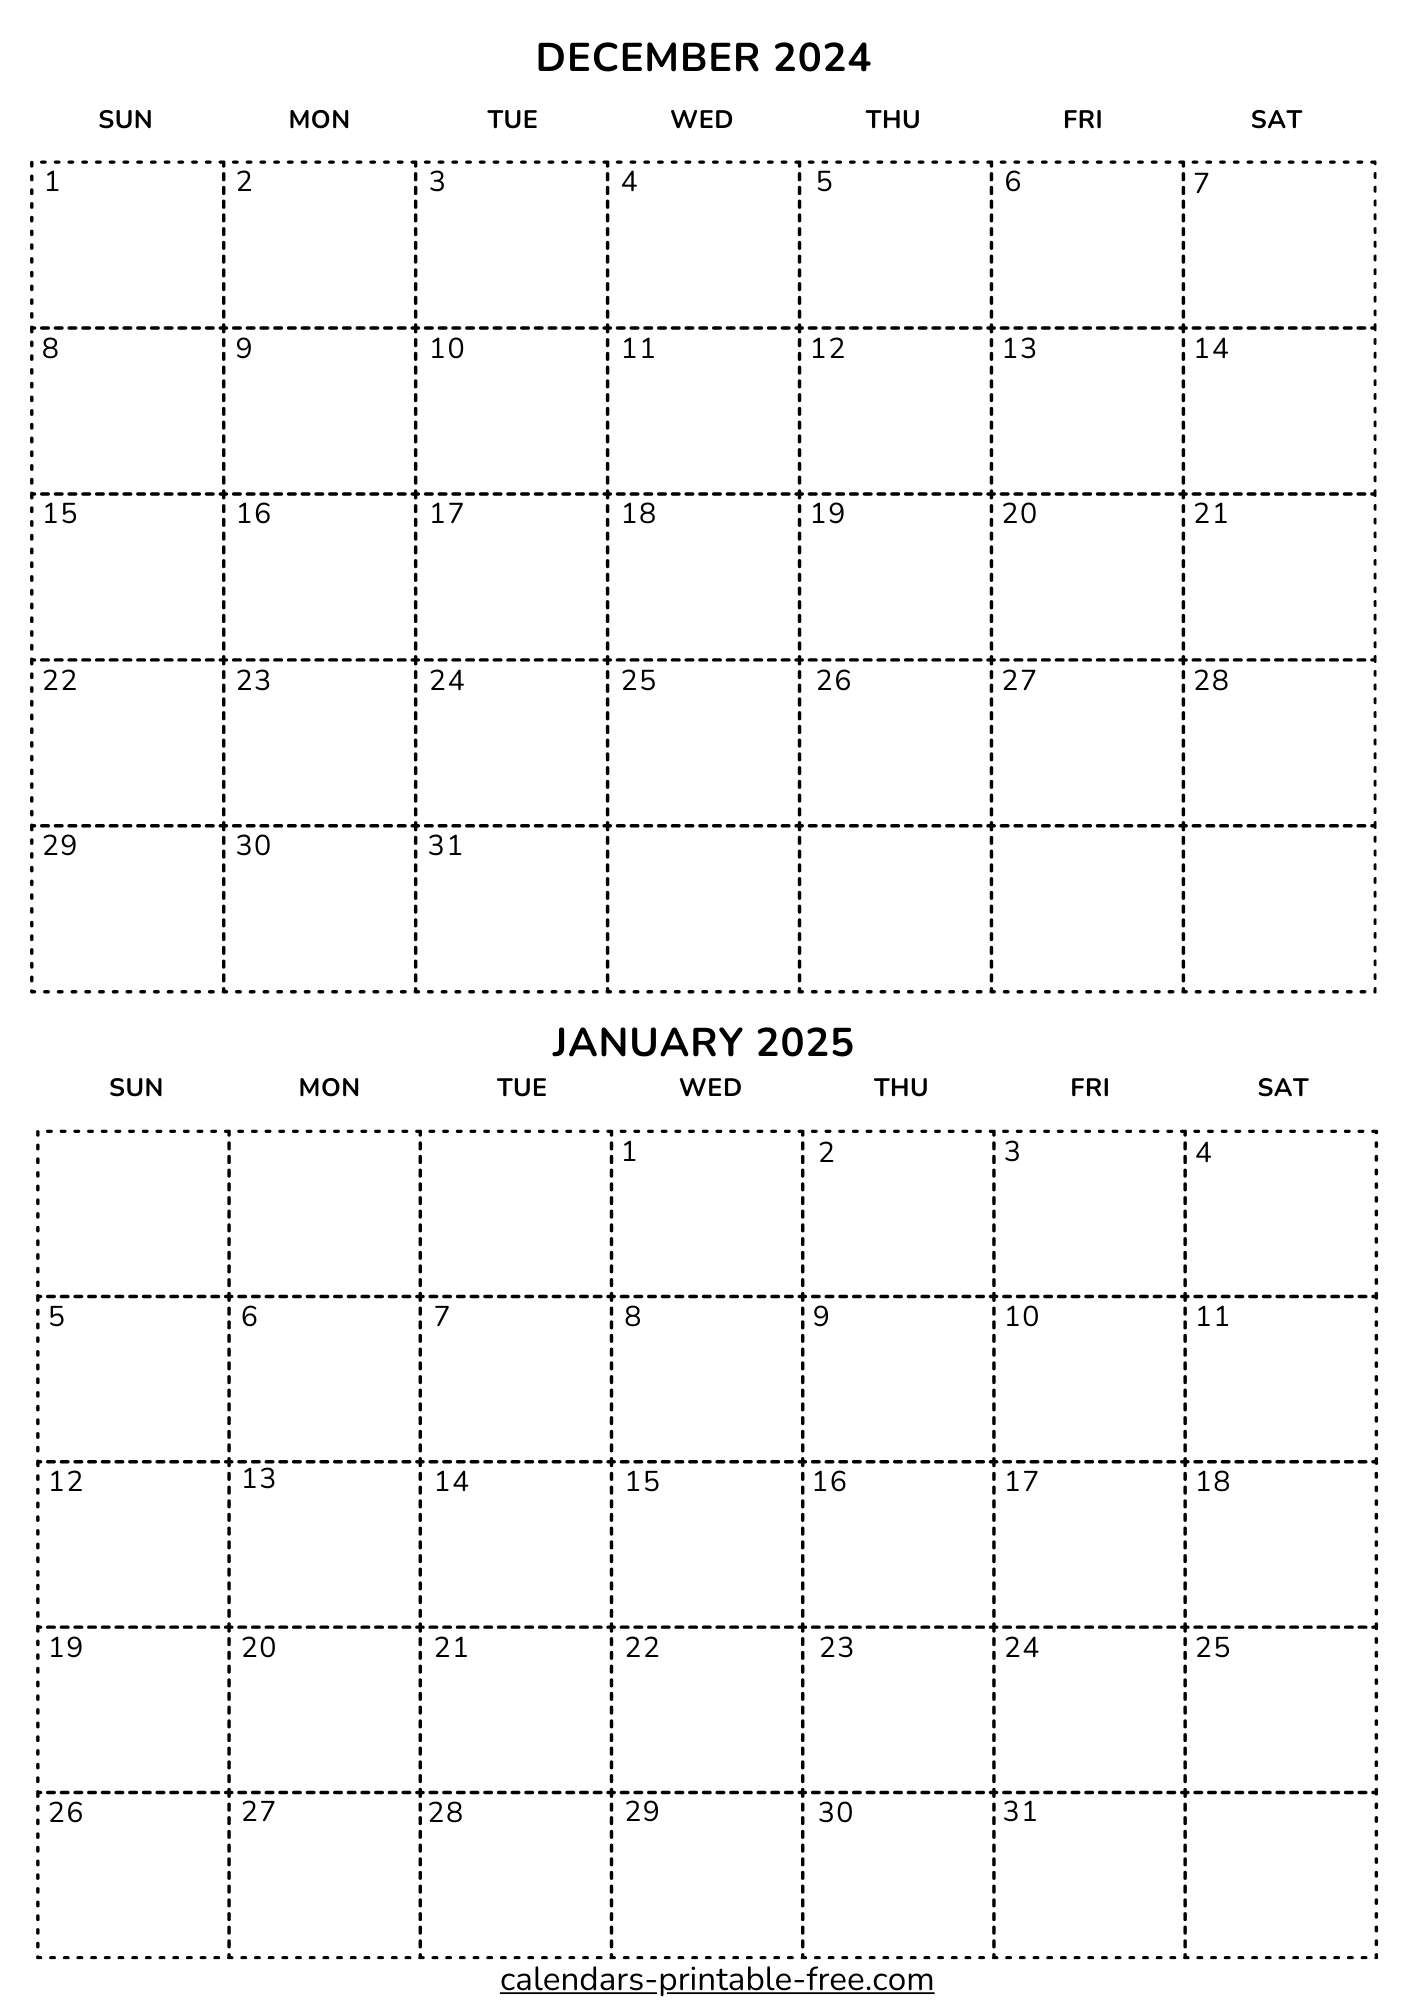 December 2024 and January 2025 Calendar Printable Free, image